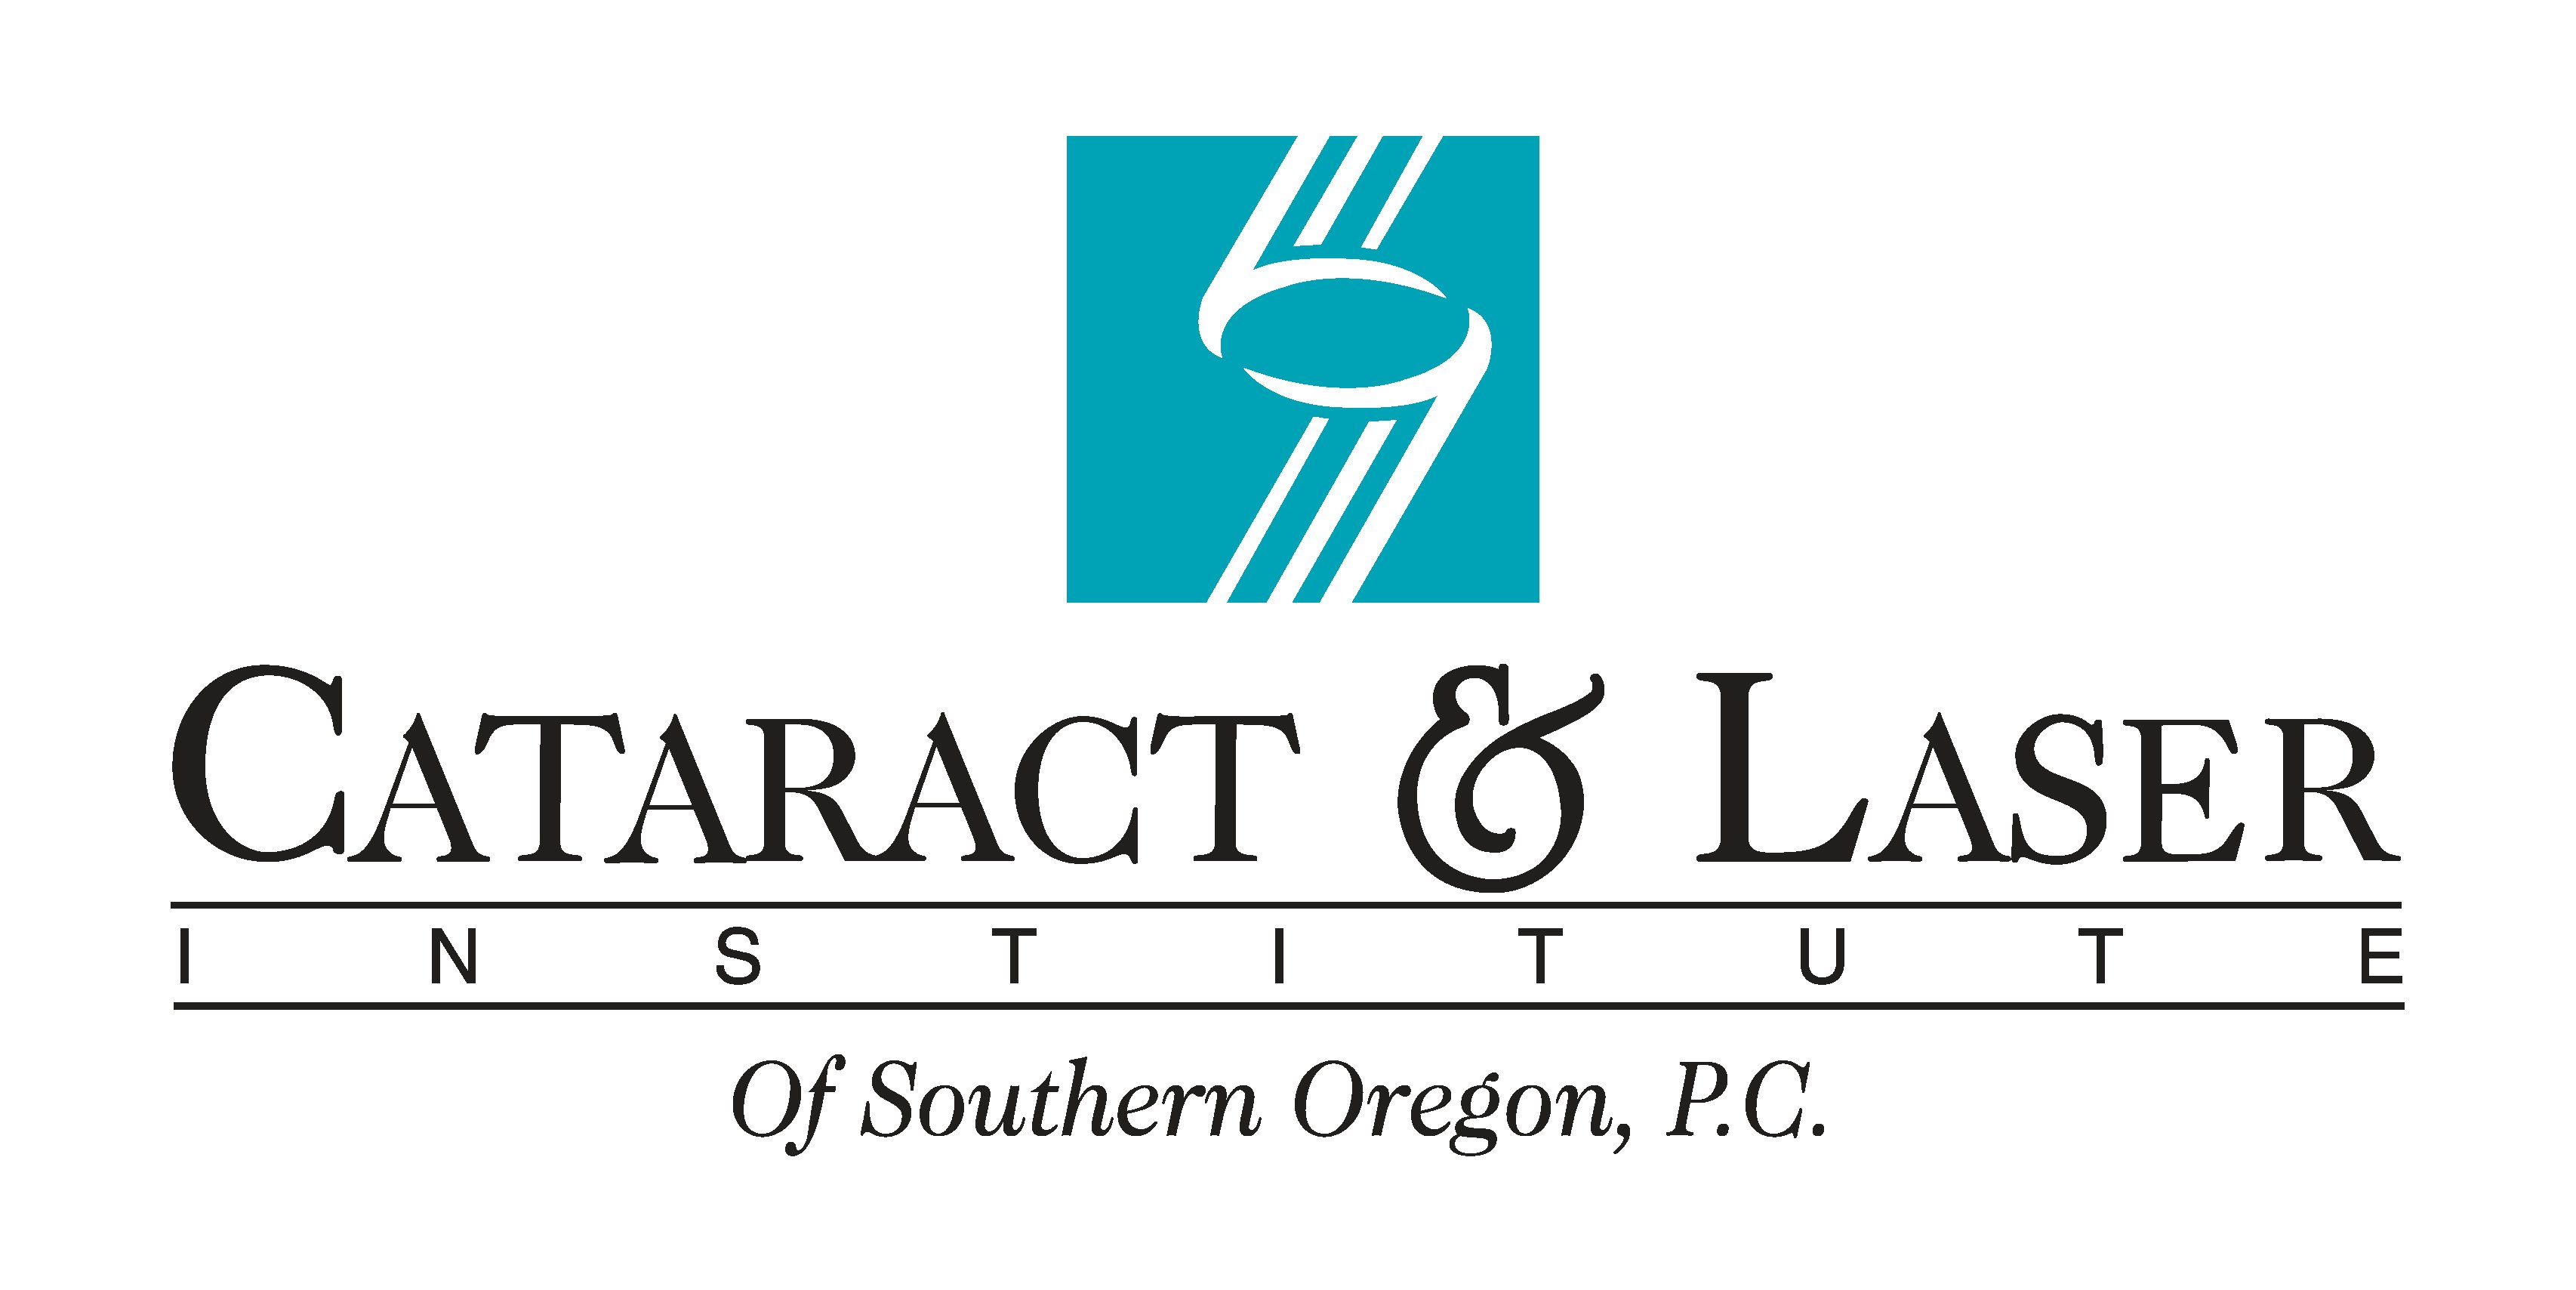 Cataract_Laser Logo